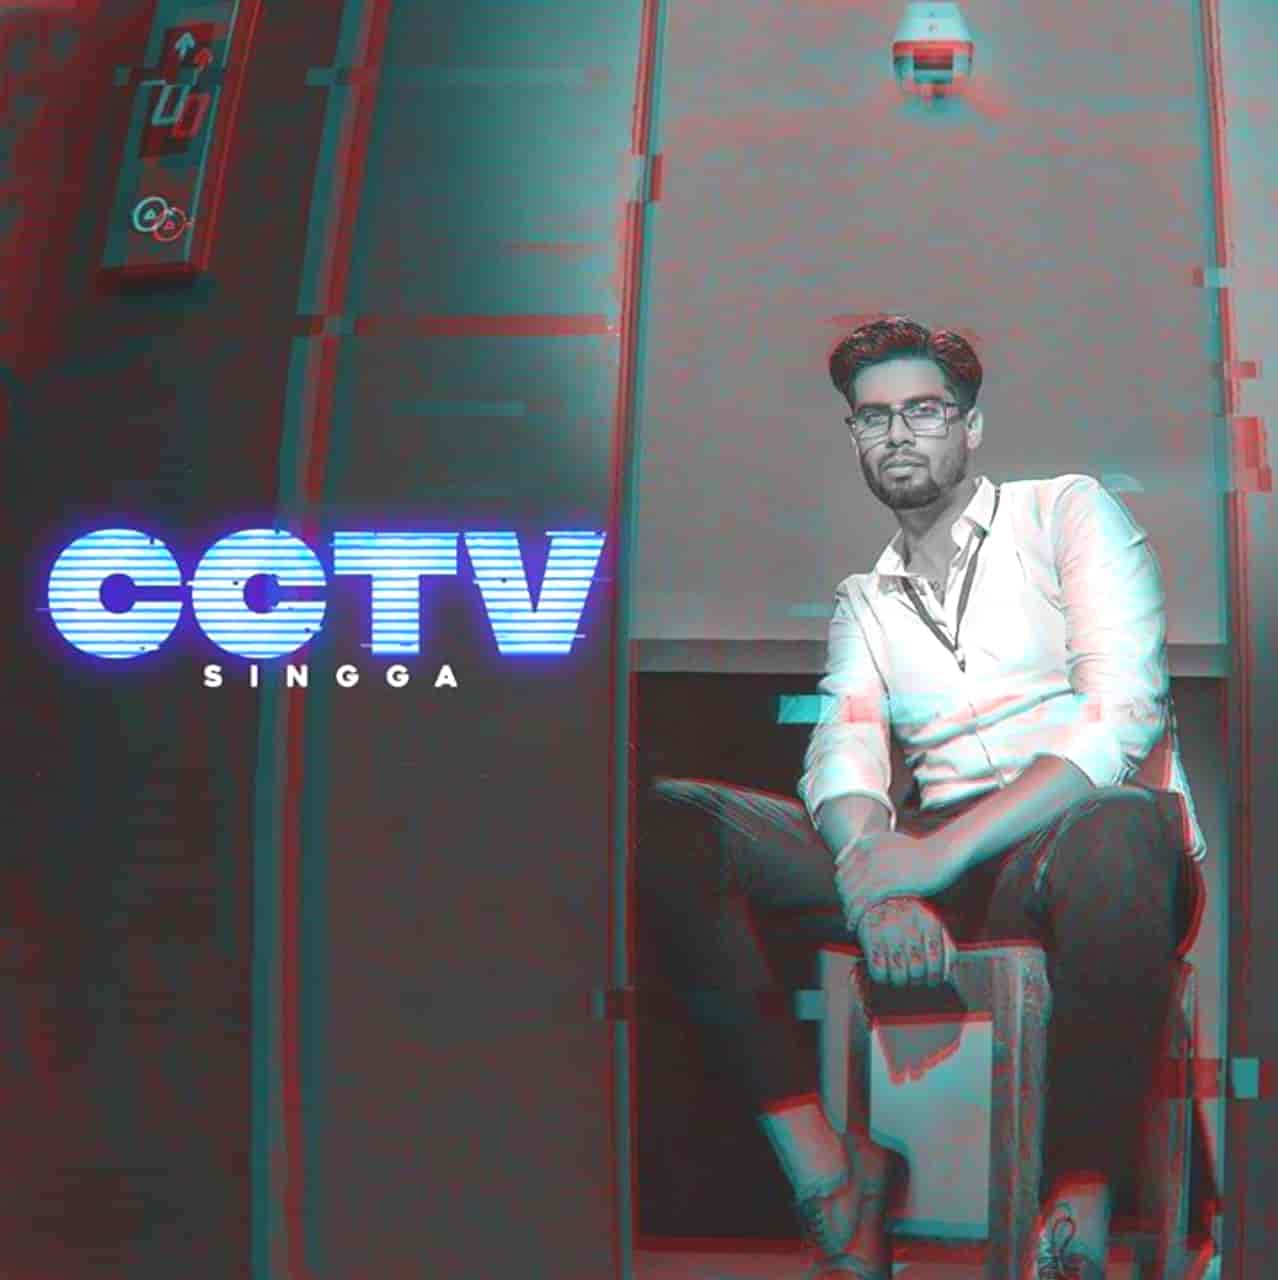 CCTV Punjabi Song Image Features Singga